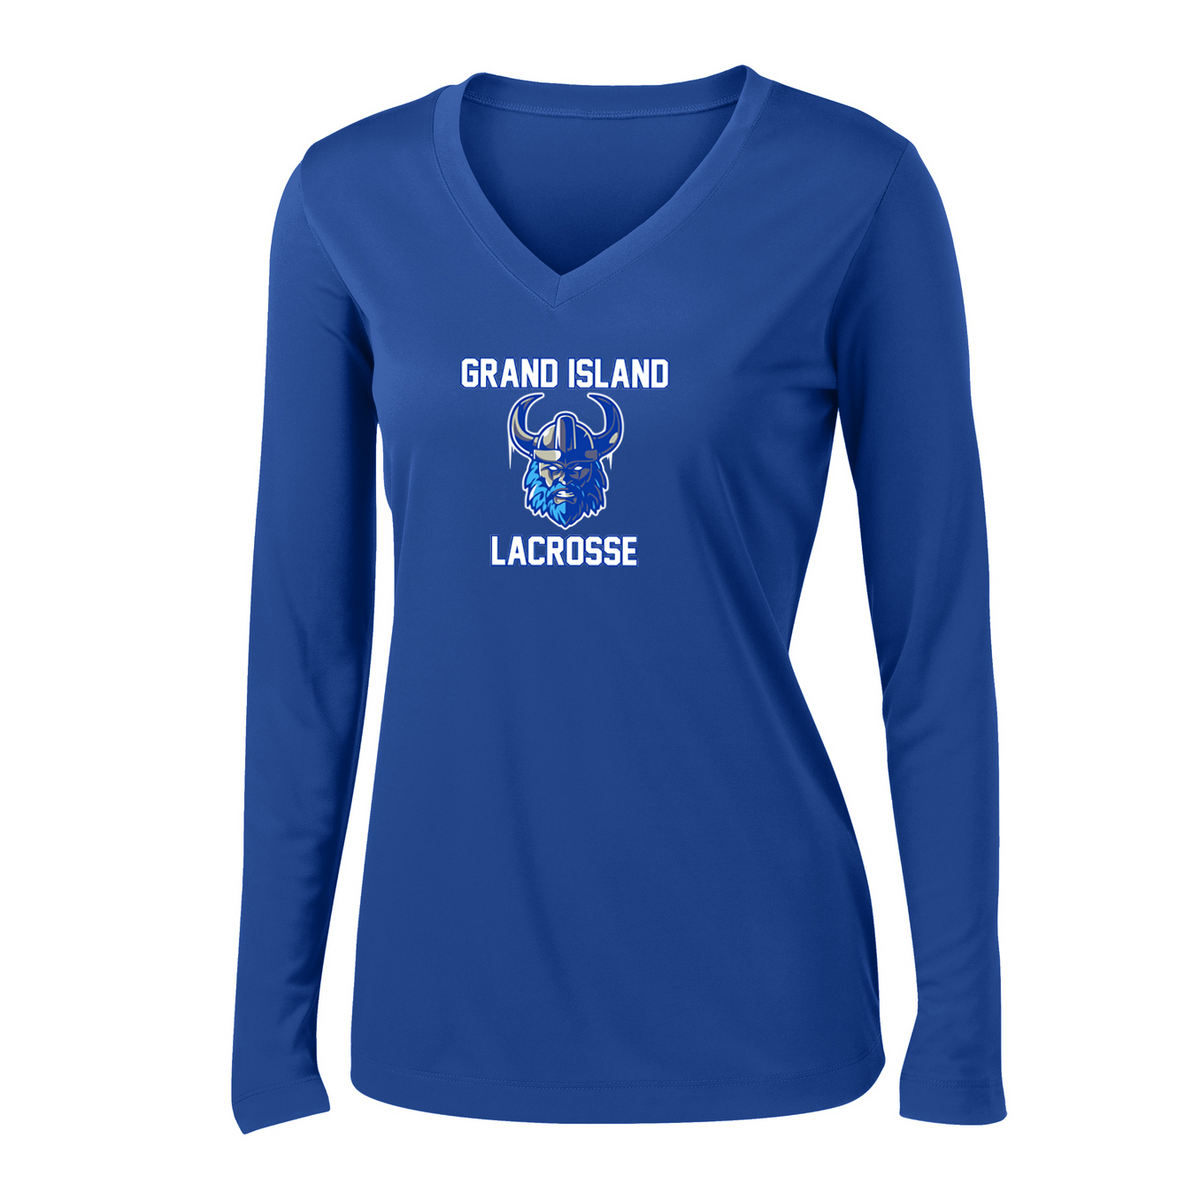 Grand Island Lacrosse Women's Long Sleeve Performance Shirt